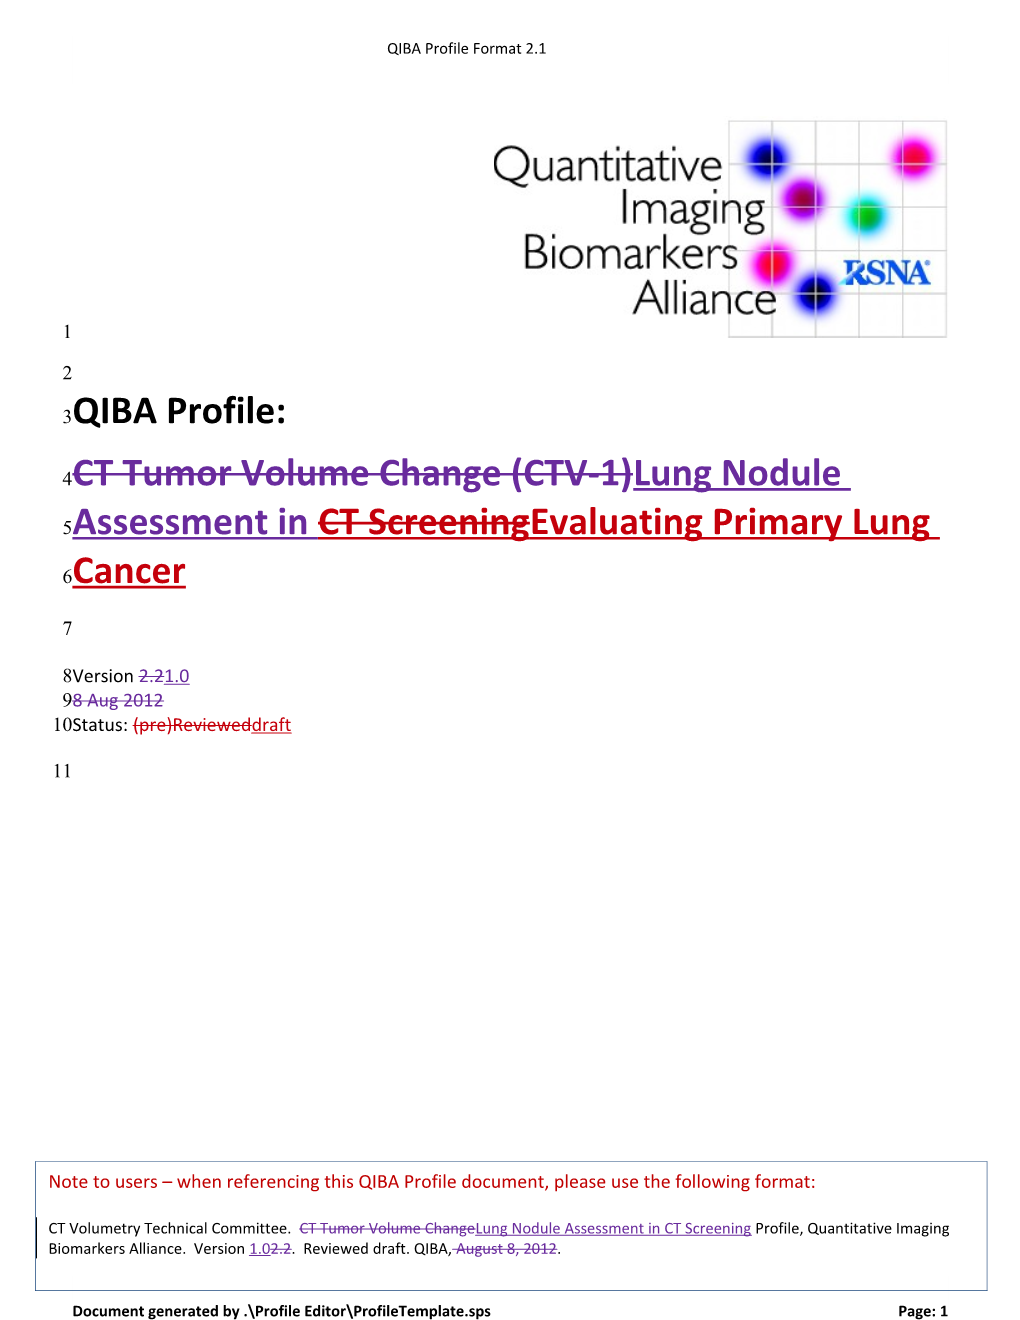 CT Tumor Volume Change (CTV-1) Lung Nodule Assessment in CT Screening Evaluating Primary